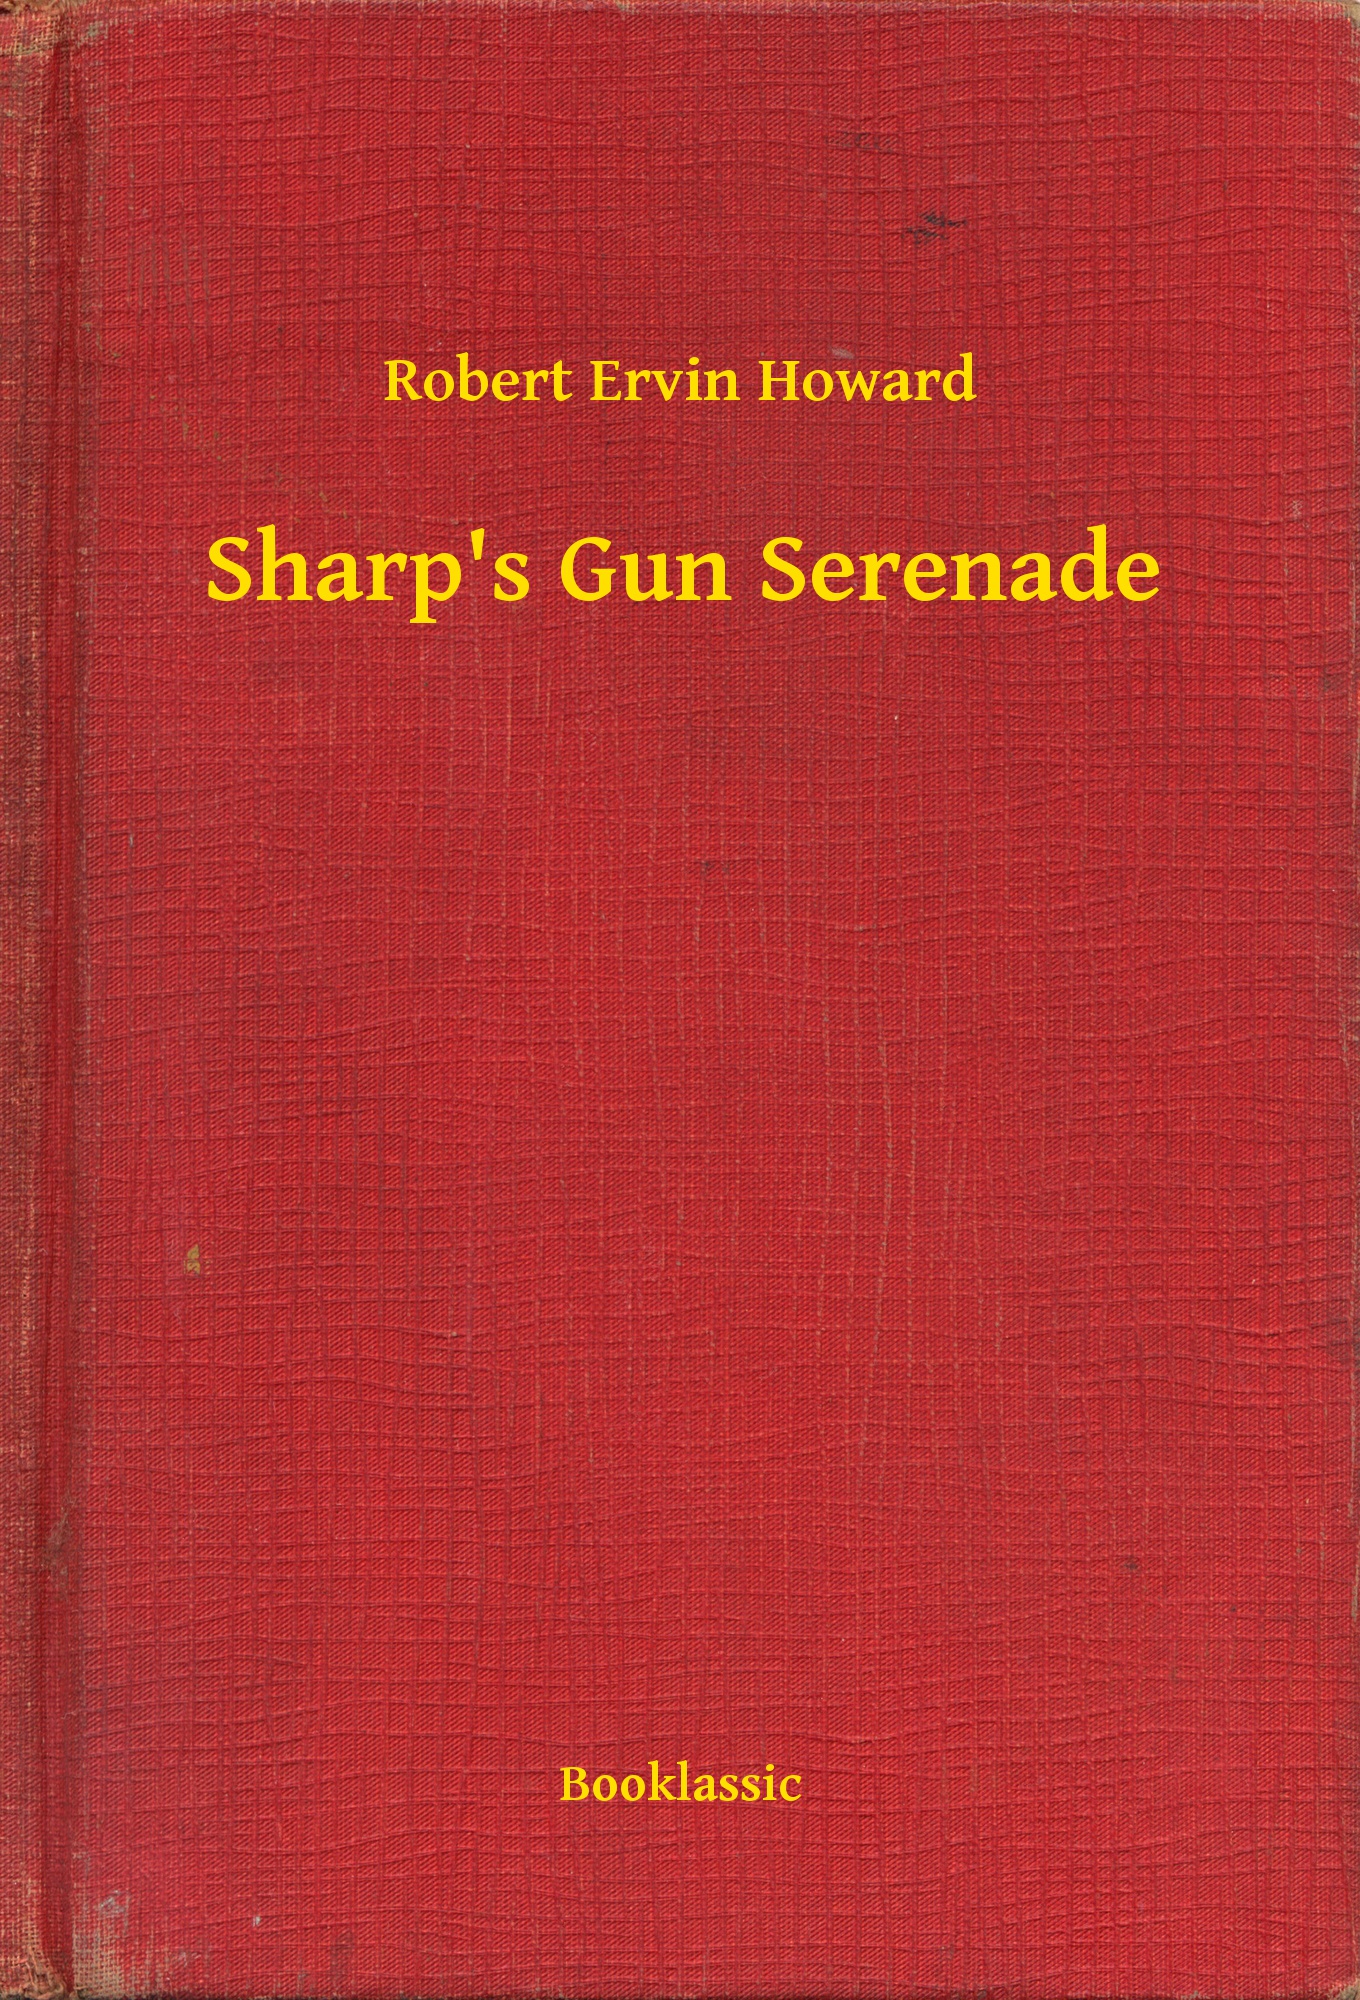 Sharp"s Gun Serenade